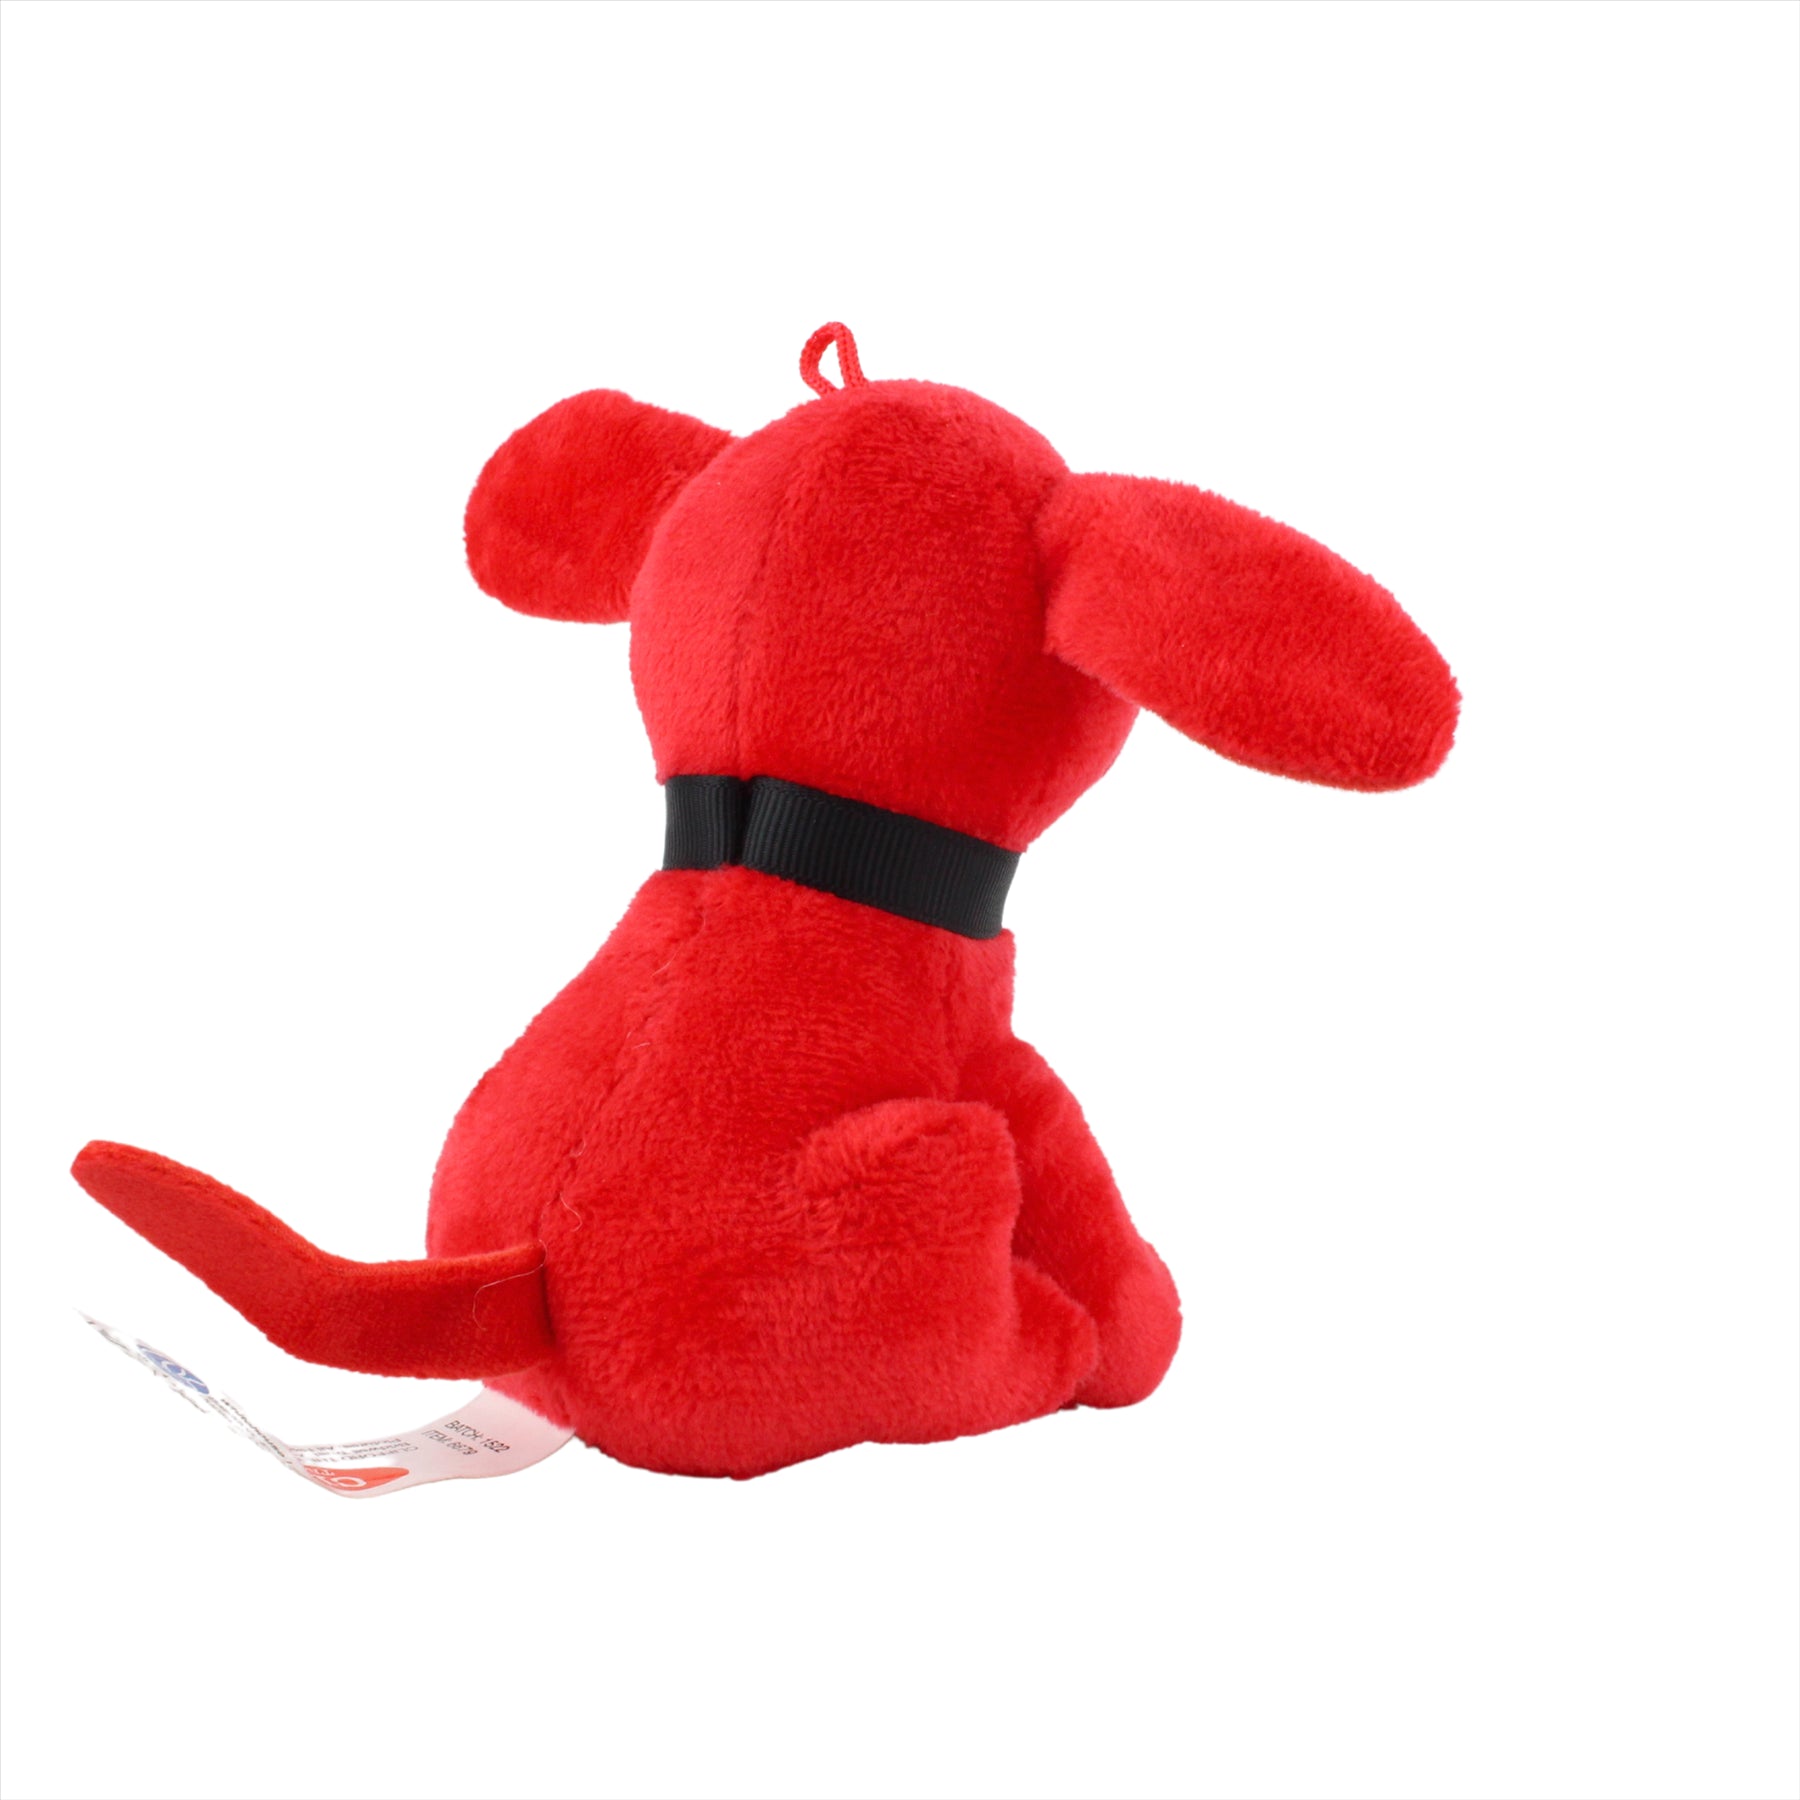 Clifford The Big Red Dog Super Soft 4" 10cm Plush - Twin Pack - Toptoys2u